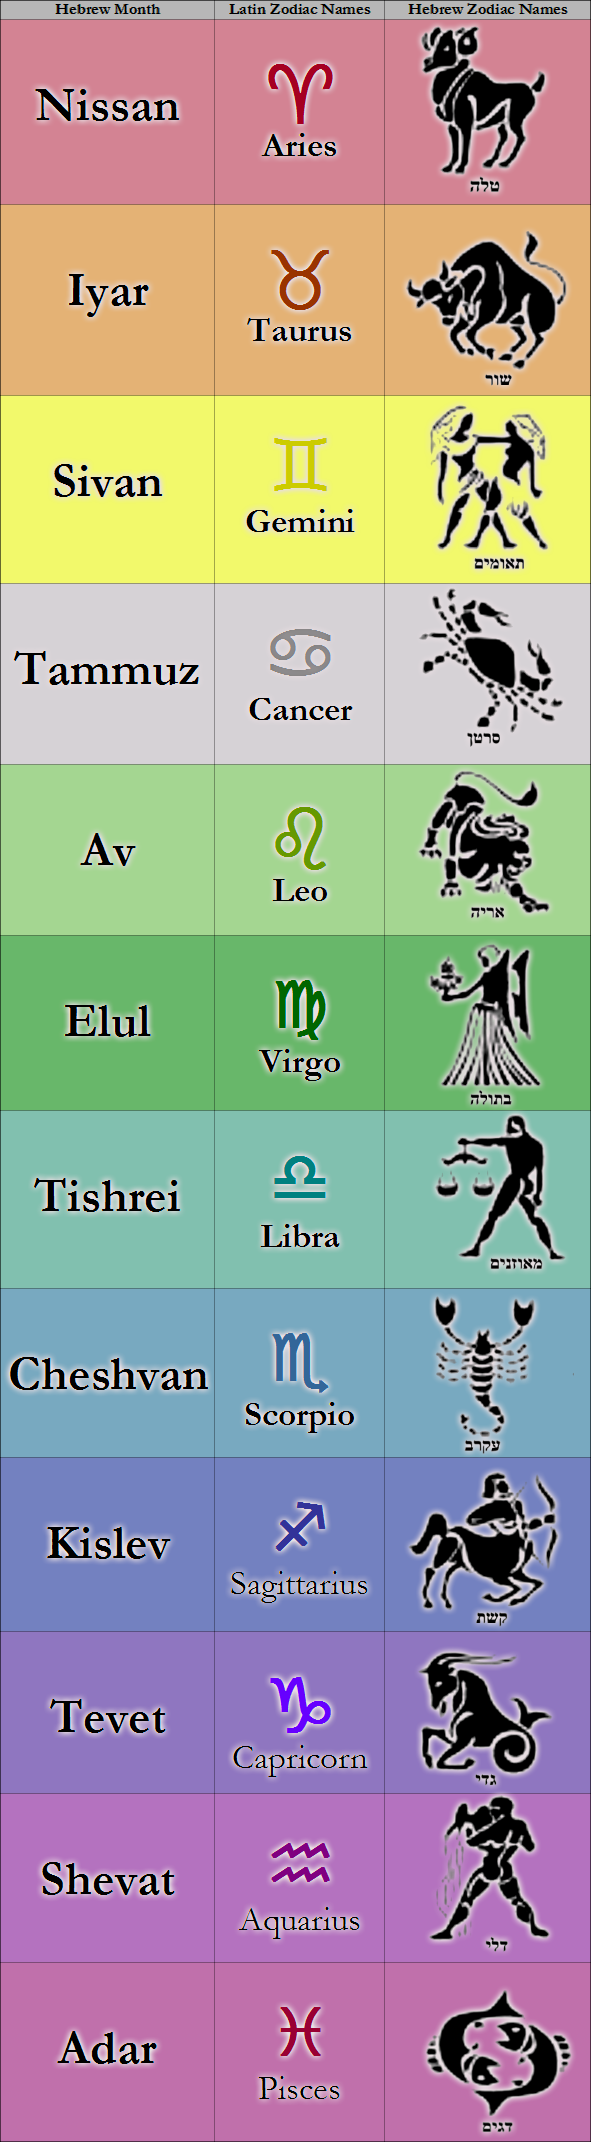 Hebrew Zodiac Signs HS Astrology & Zodiac Signs